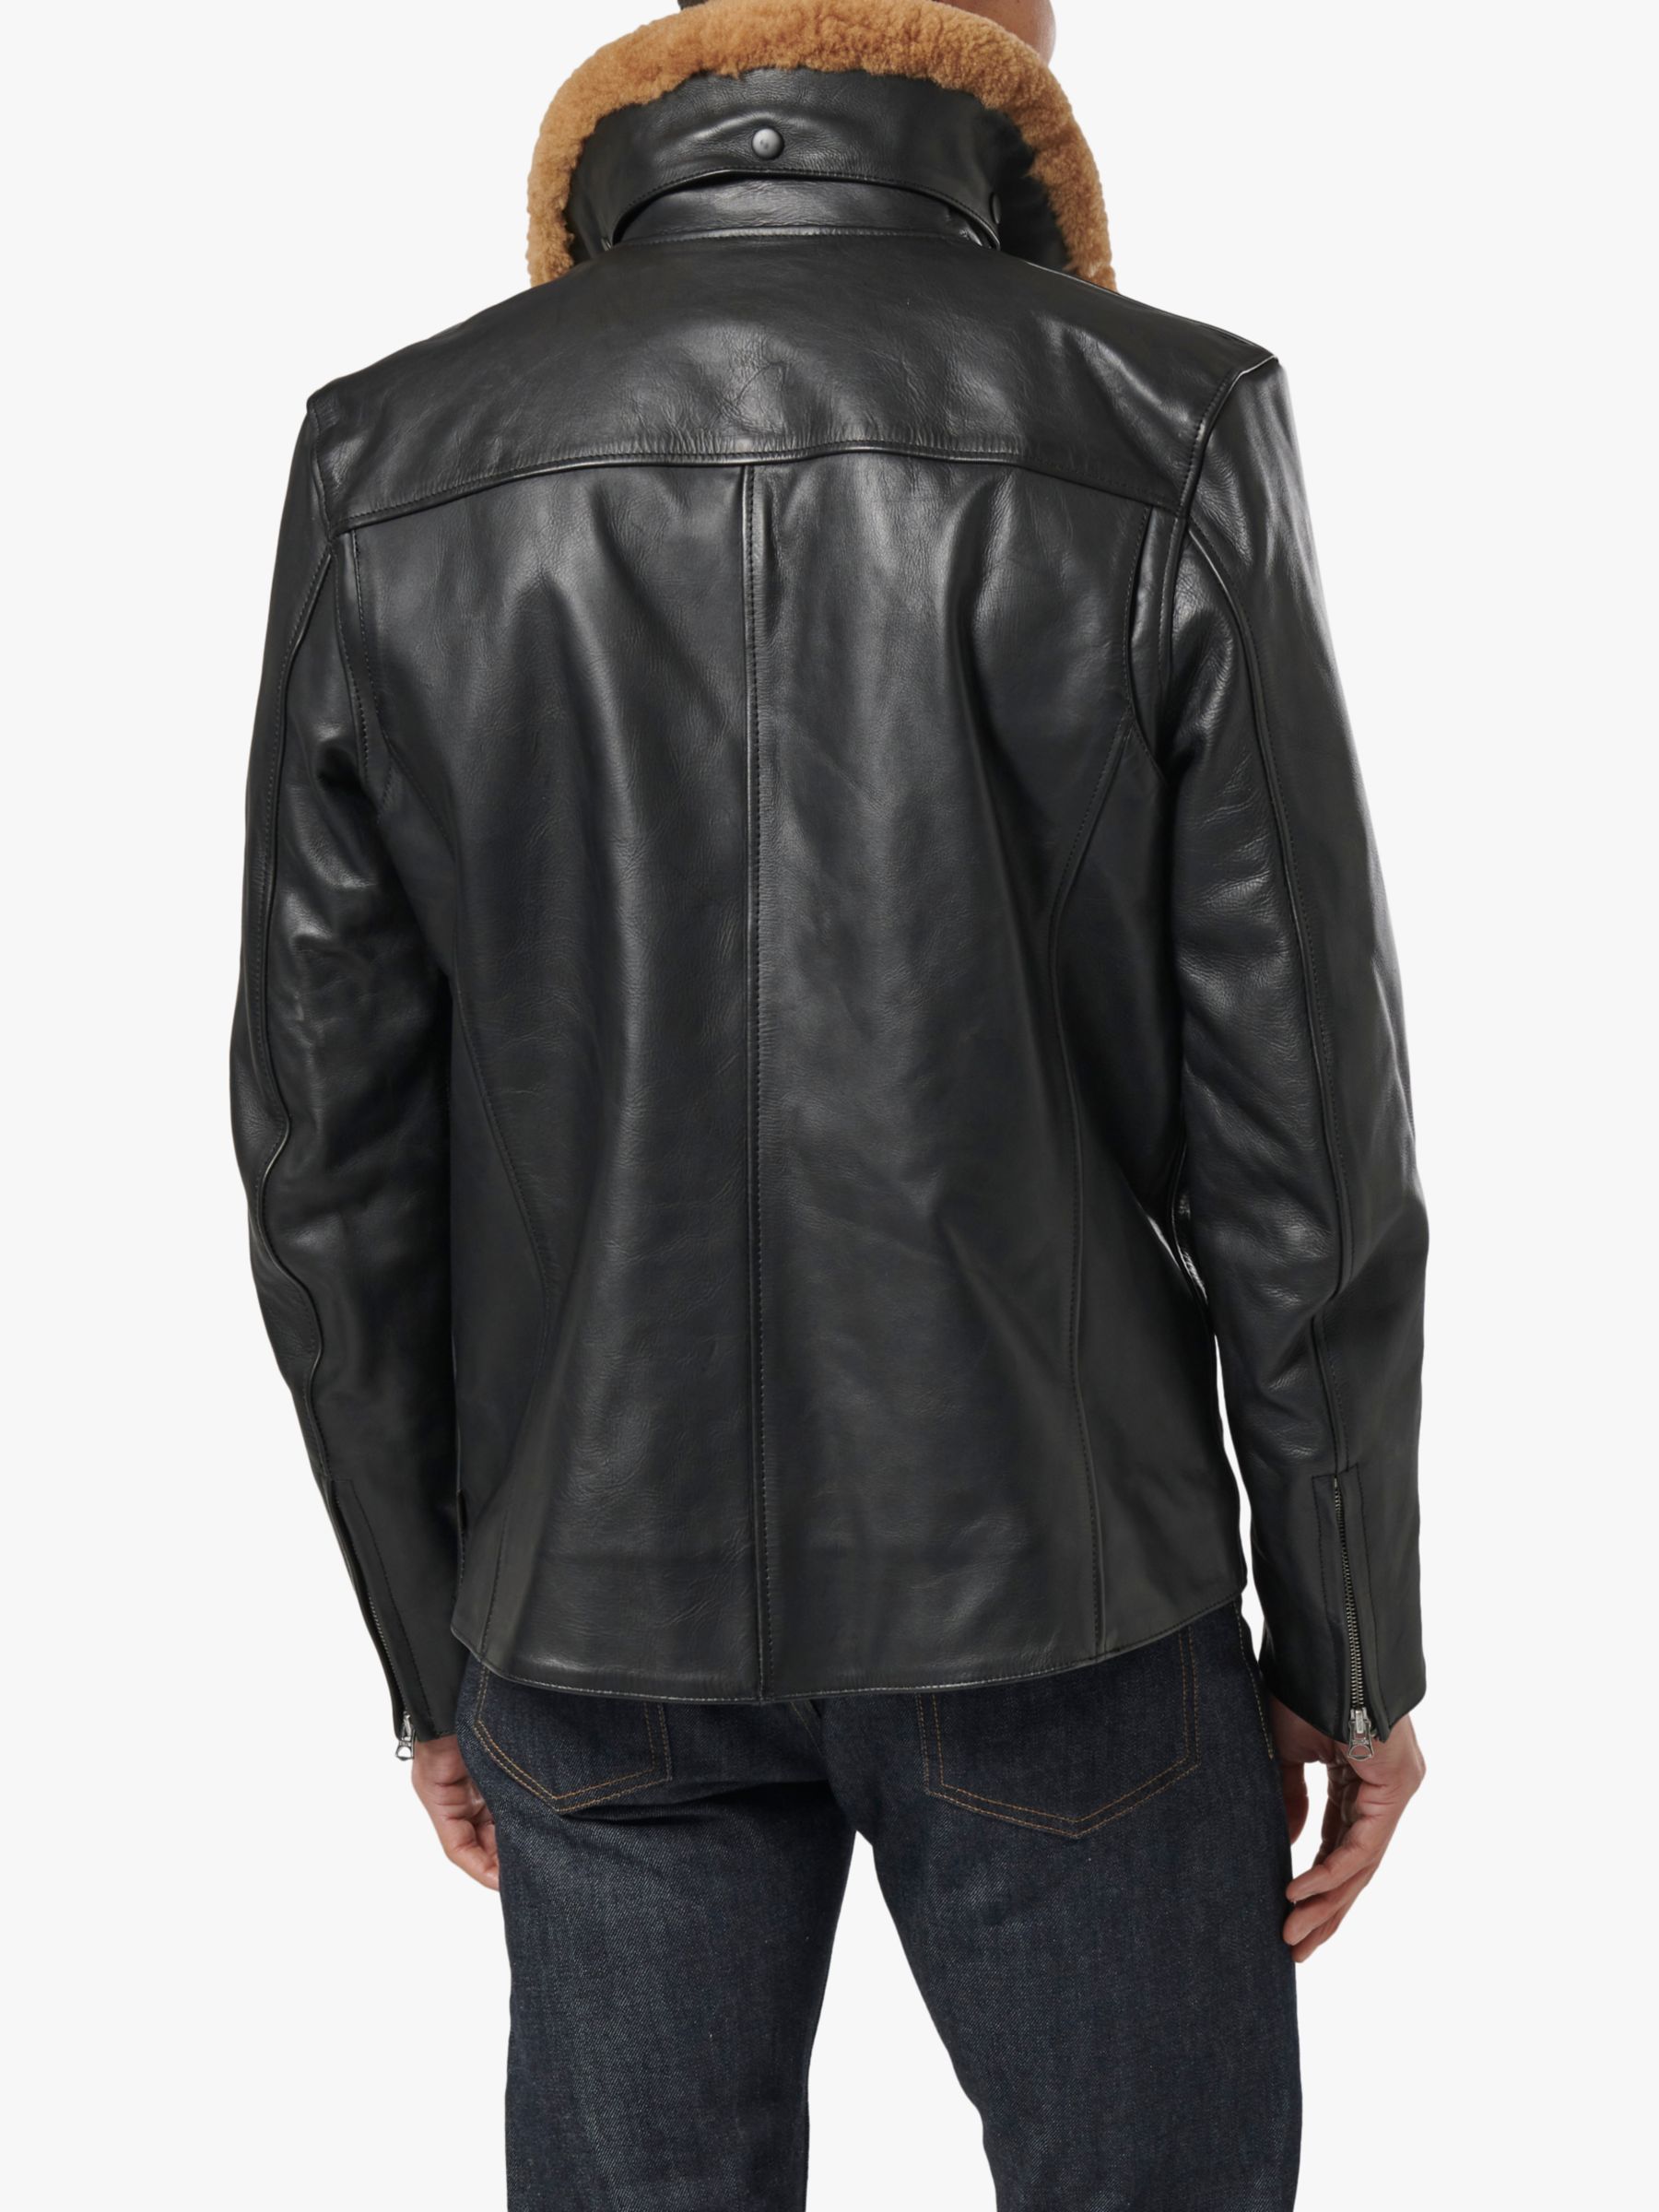 Triumph Motorcycles Rexford Leather Jacket, Black, M